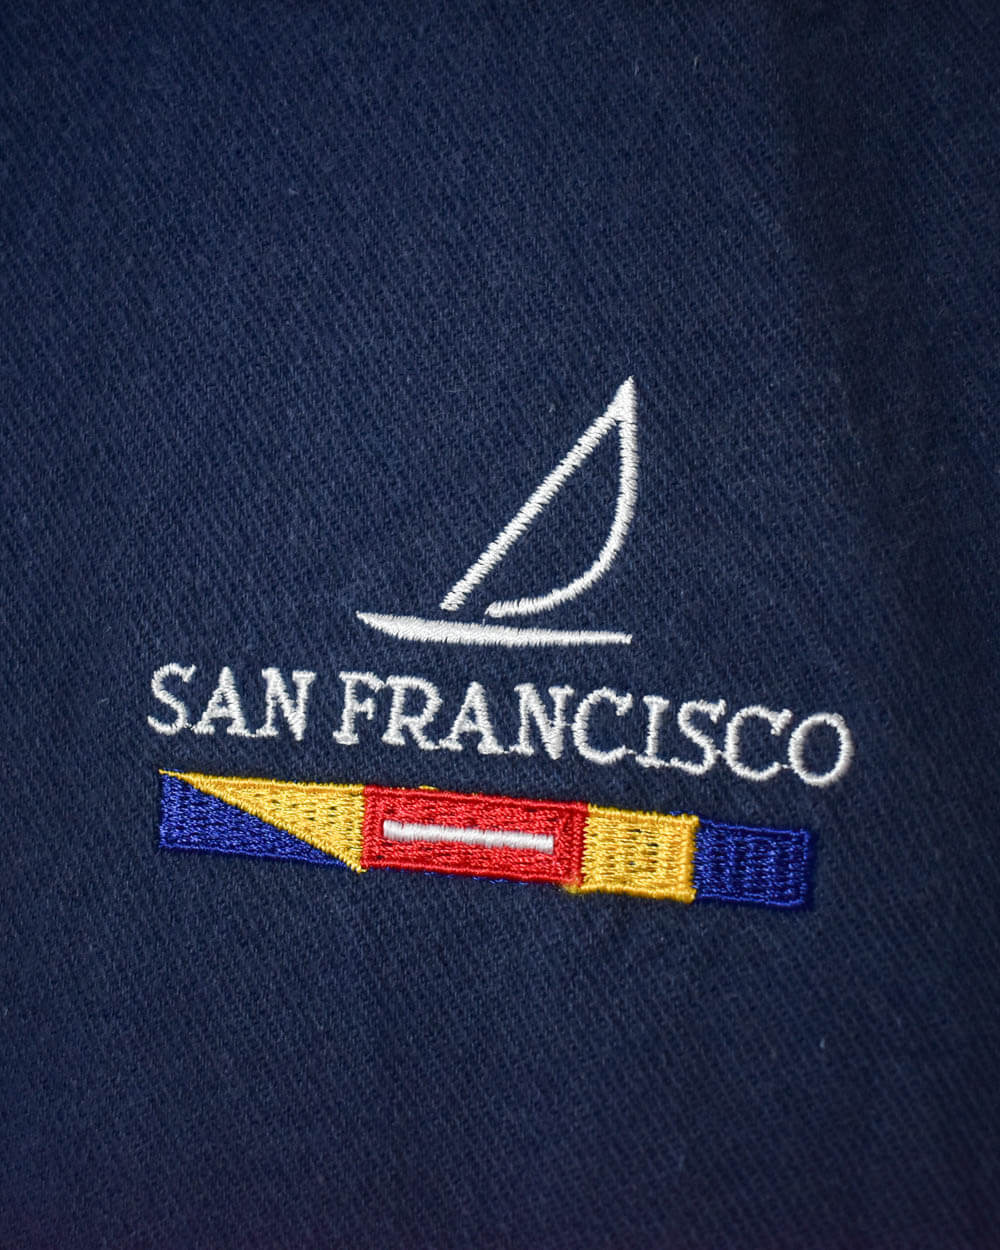 Navy Crazy Shirt San Francisco Collared Sweatshirt - X-Large